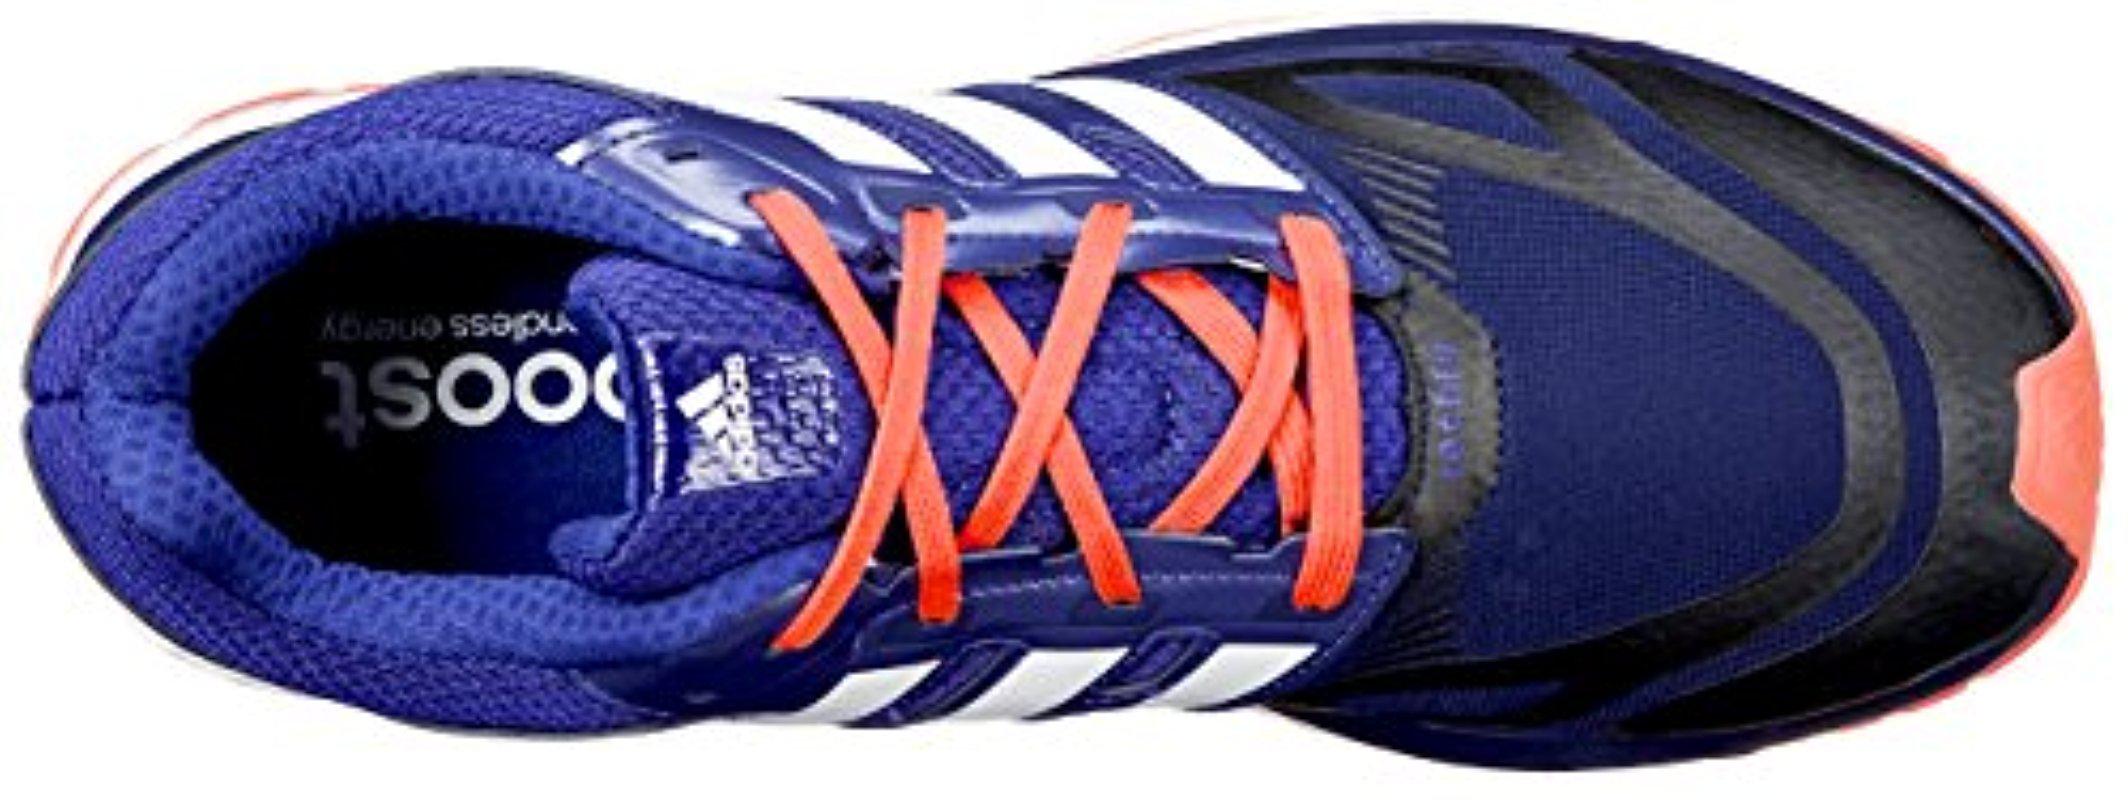 adidas Performance Response Boost Techfit M Running Shoe in Blue Men | Lyst